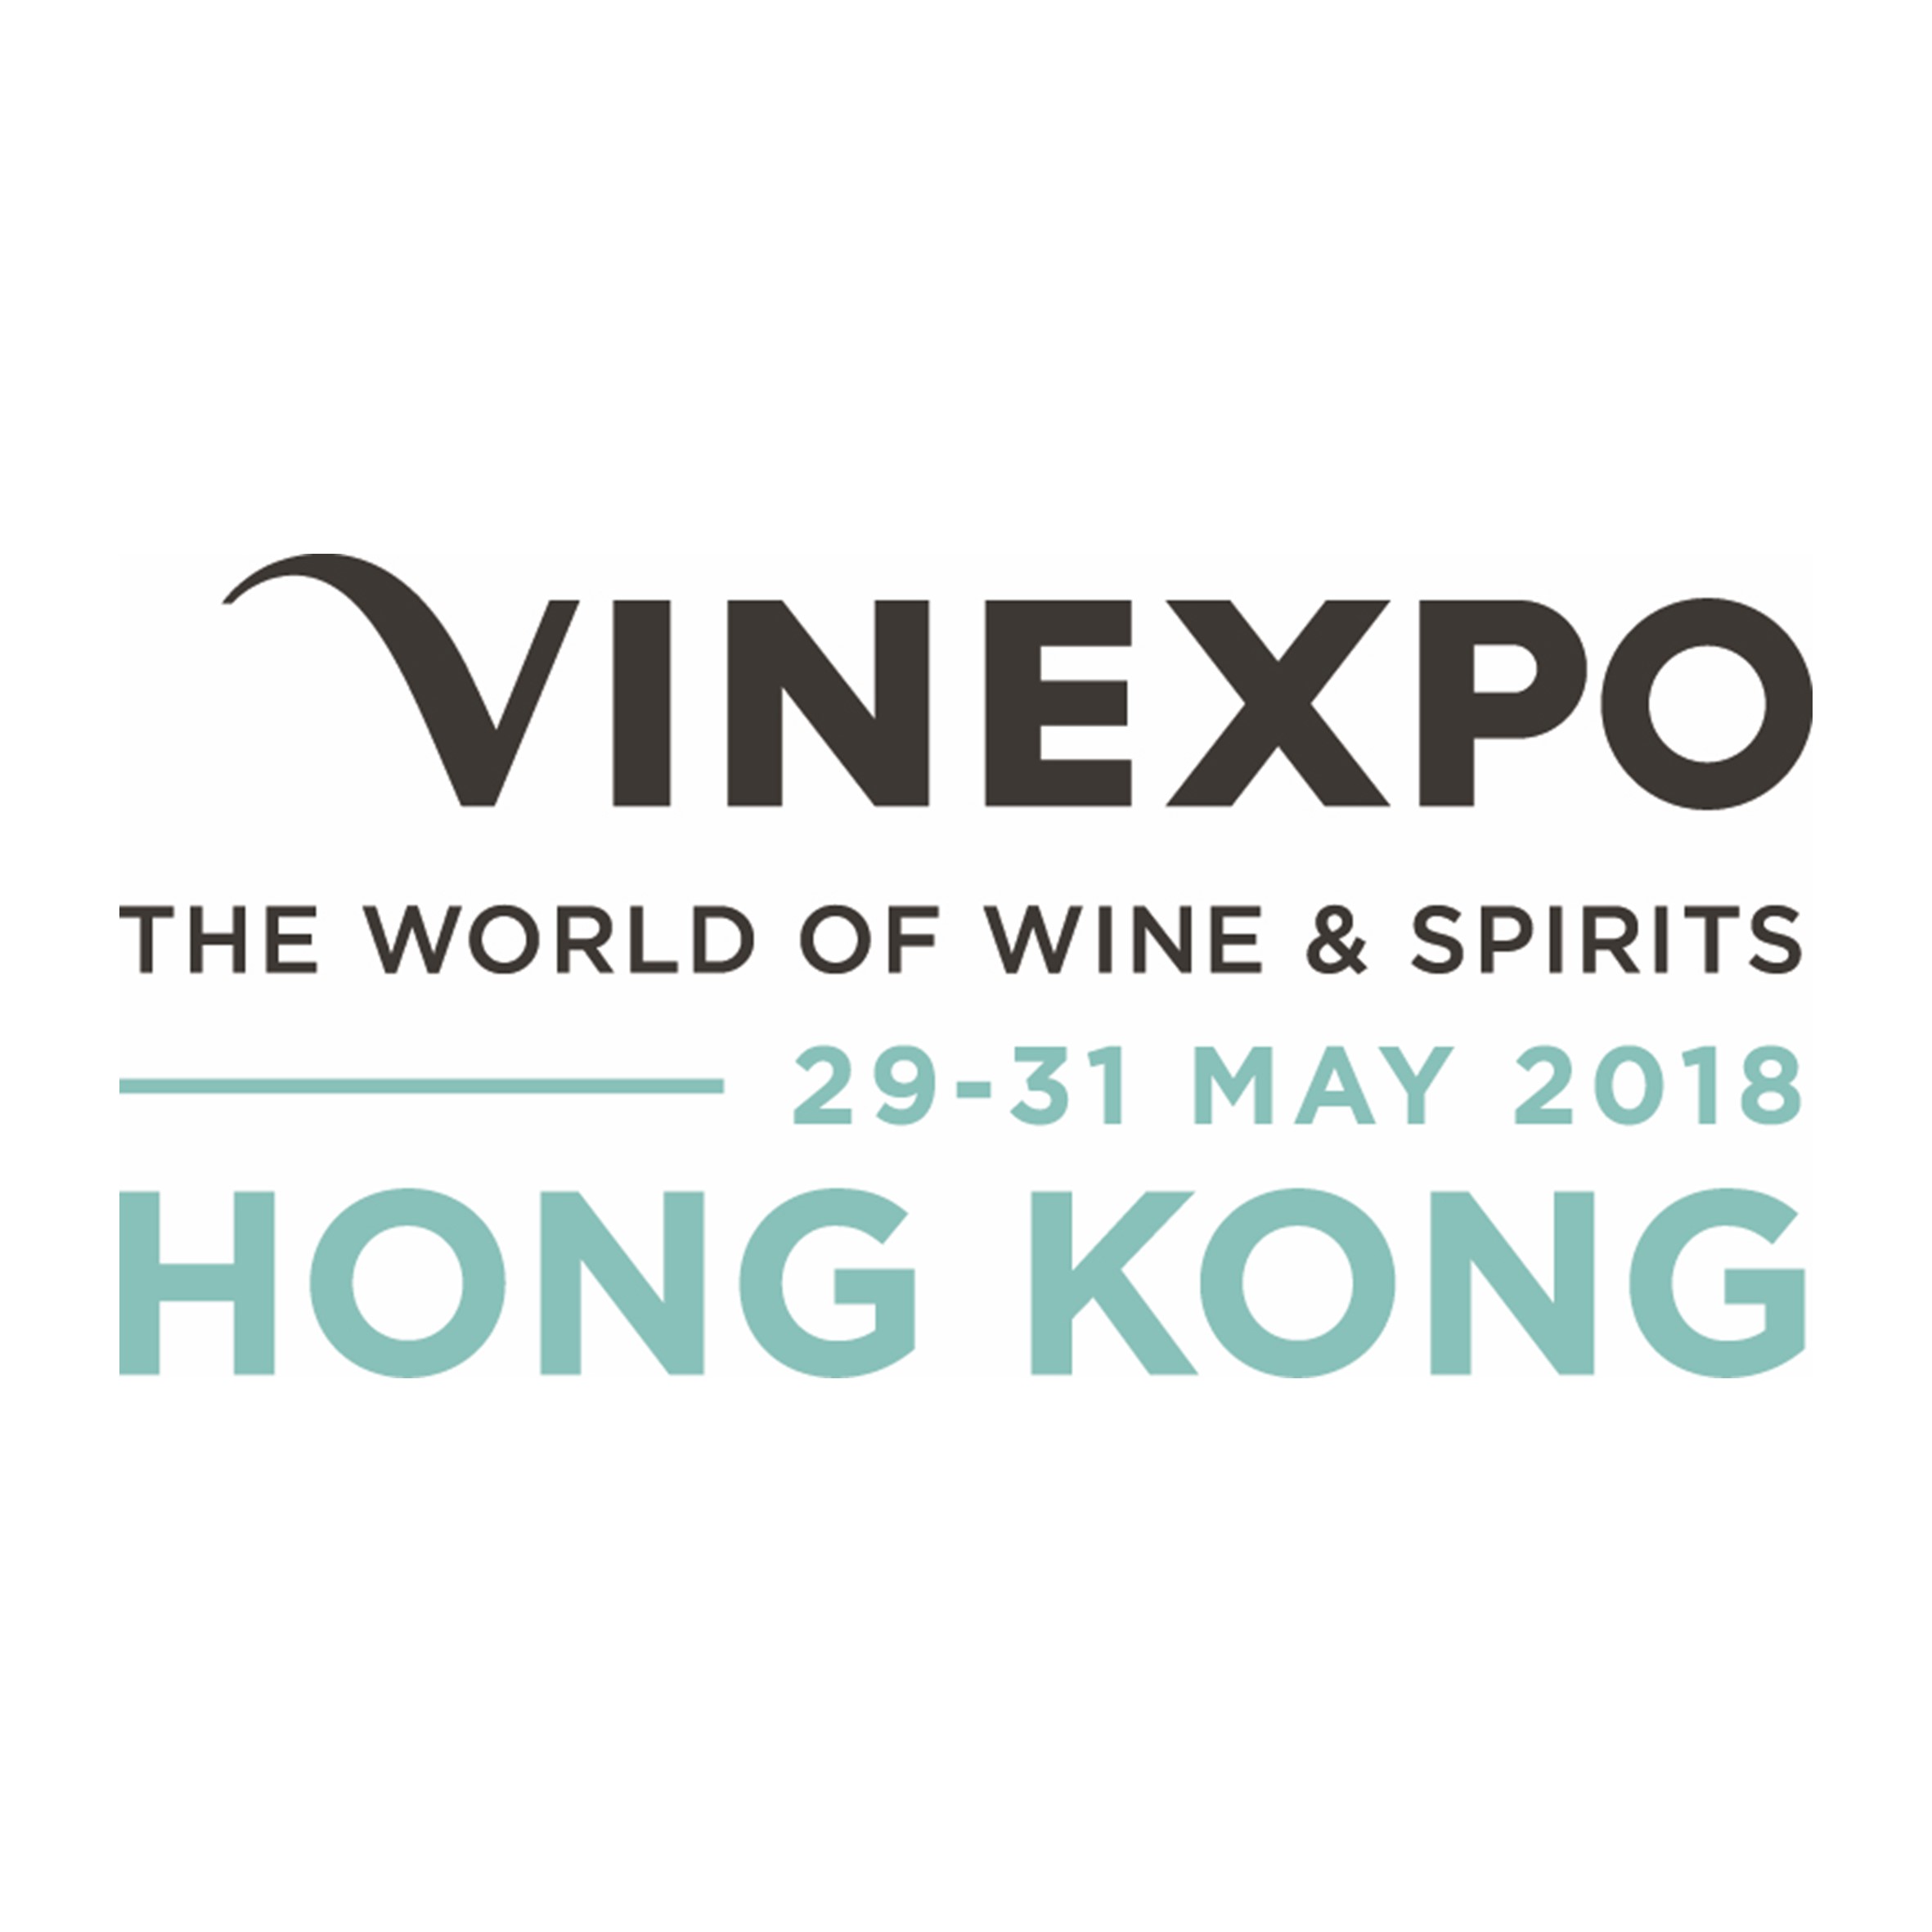 Vinexpo Hong Kong Logo 2018 - Australia, cannabis and the wine industry